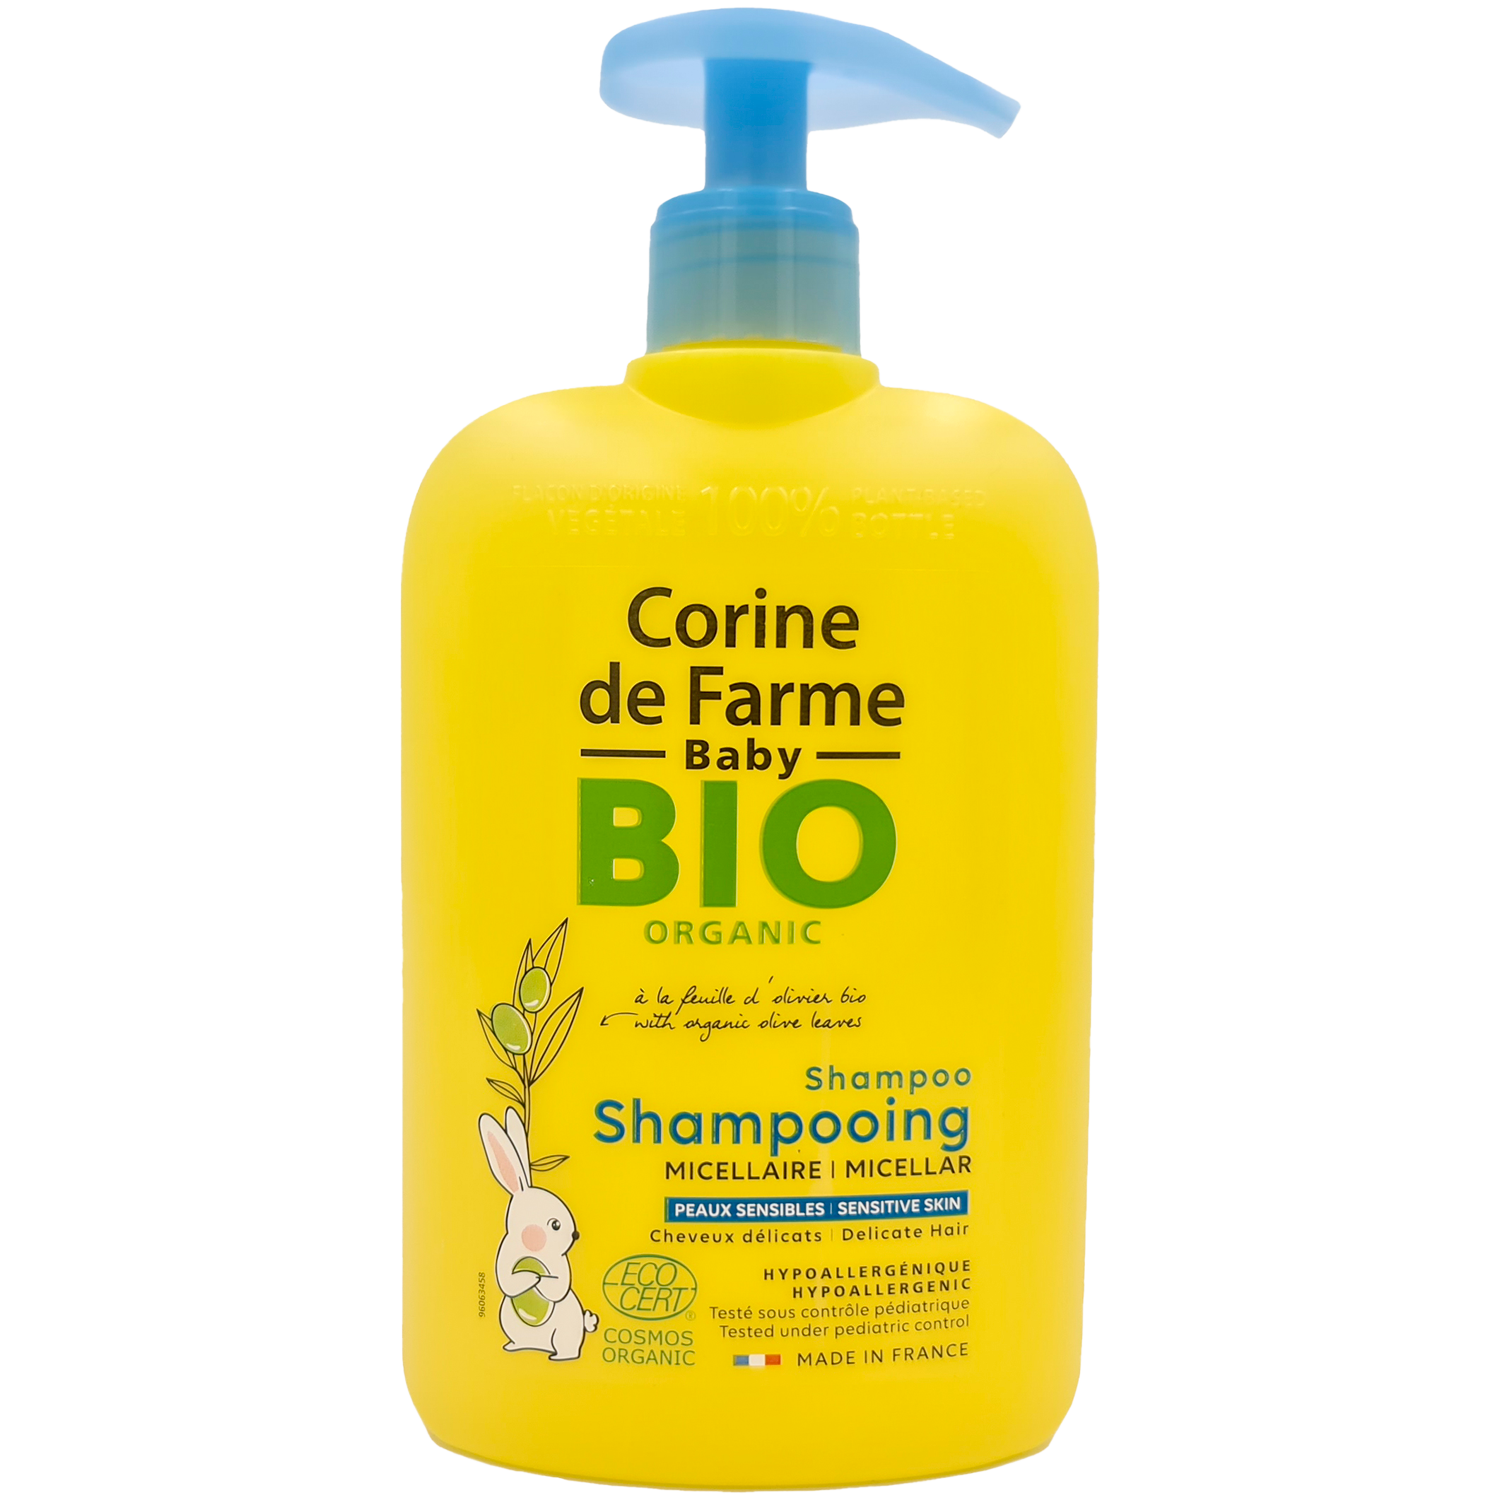 apteka gemini szampon corine de farme